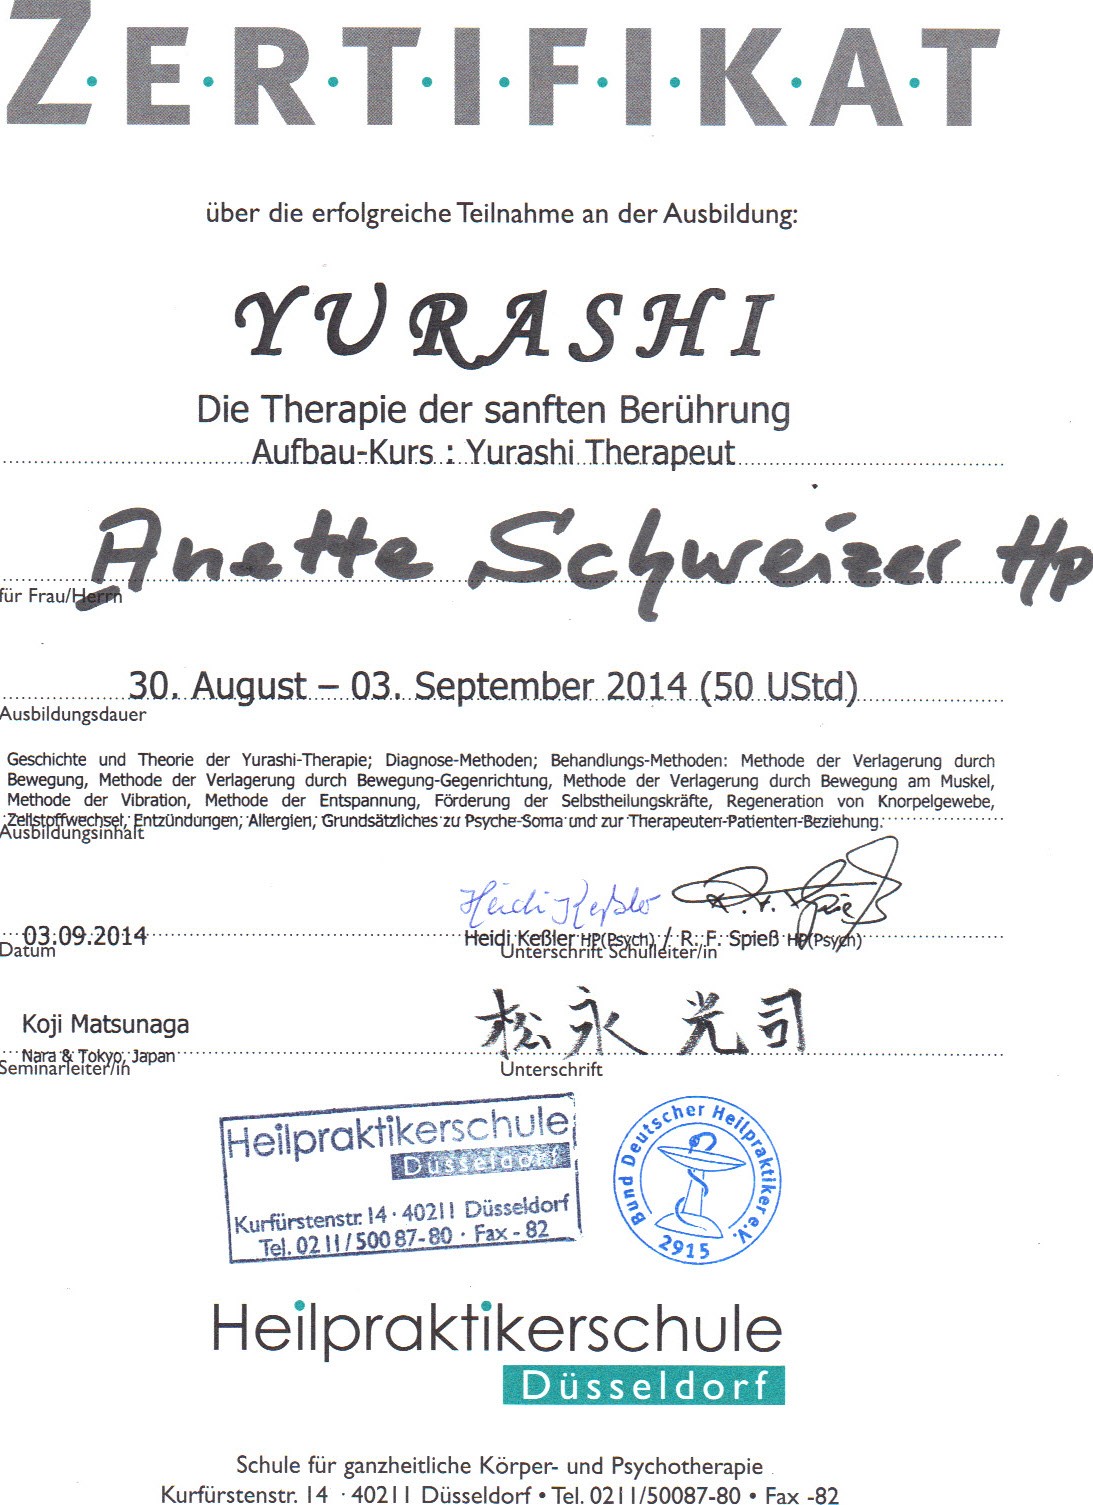 Yurashi Therapeut